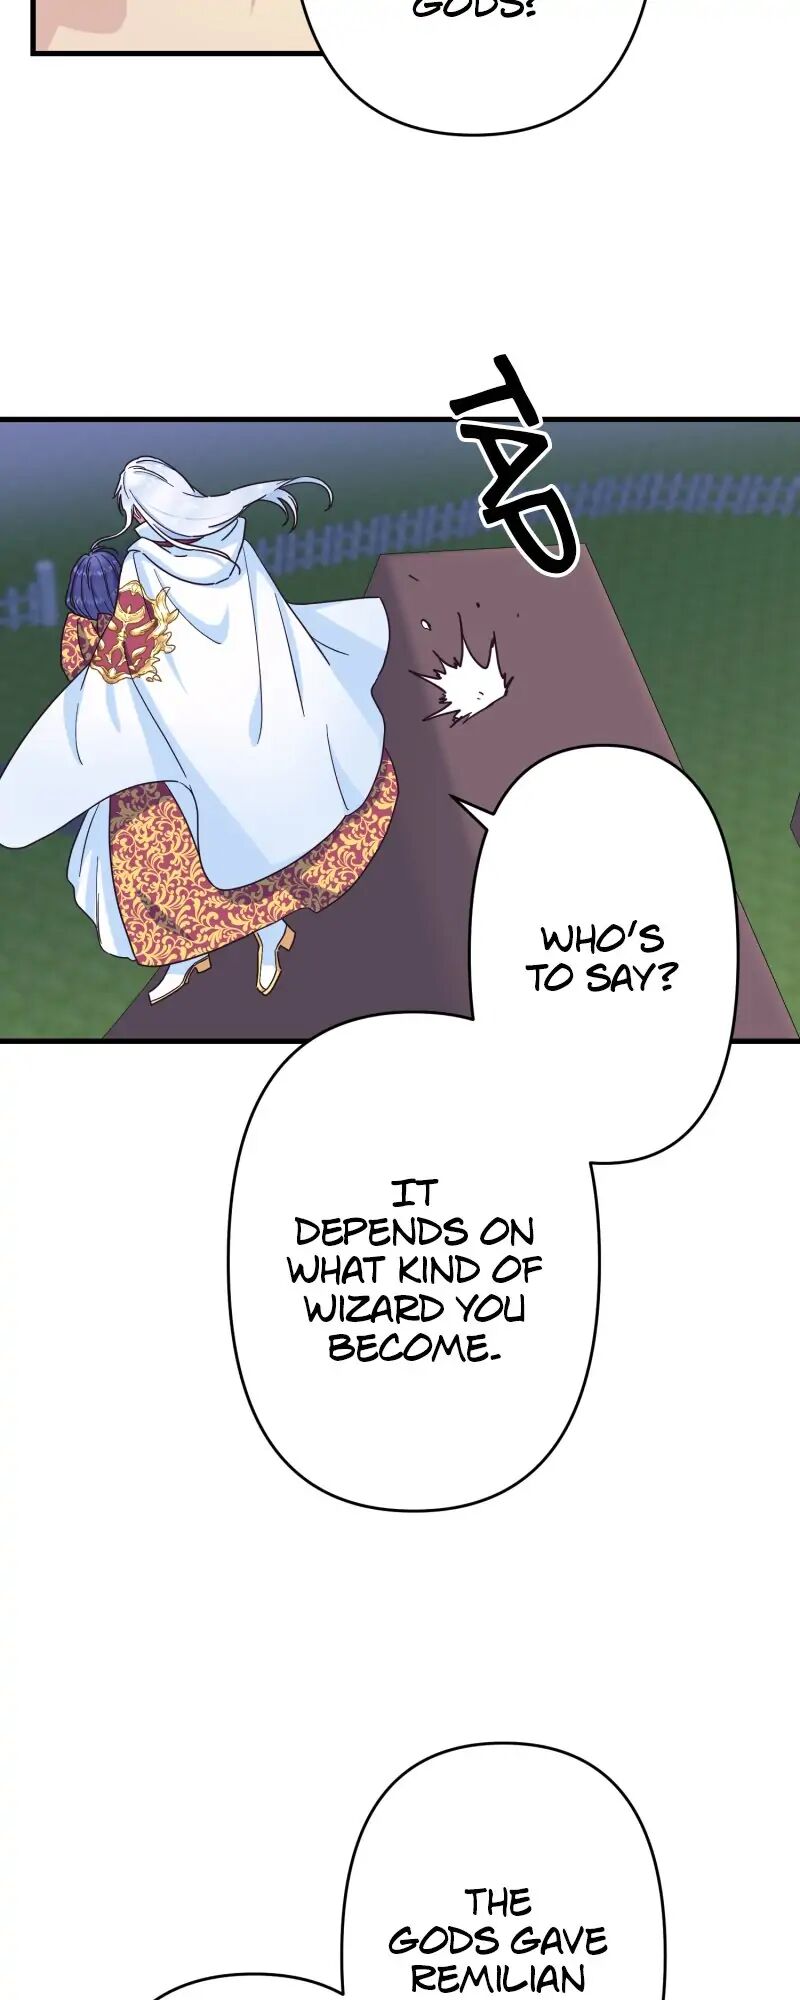 A Twist of Fate: A Wizard’s Fairy Tale Chapter 24 - ManhwaFull.net